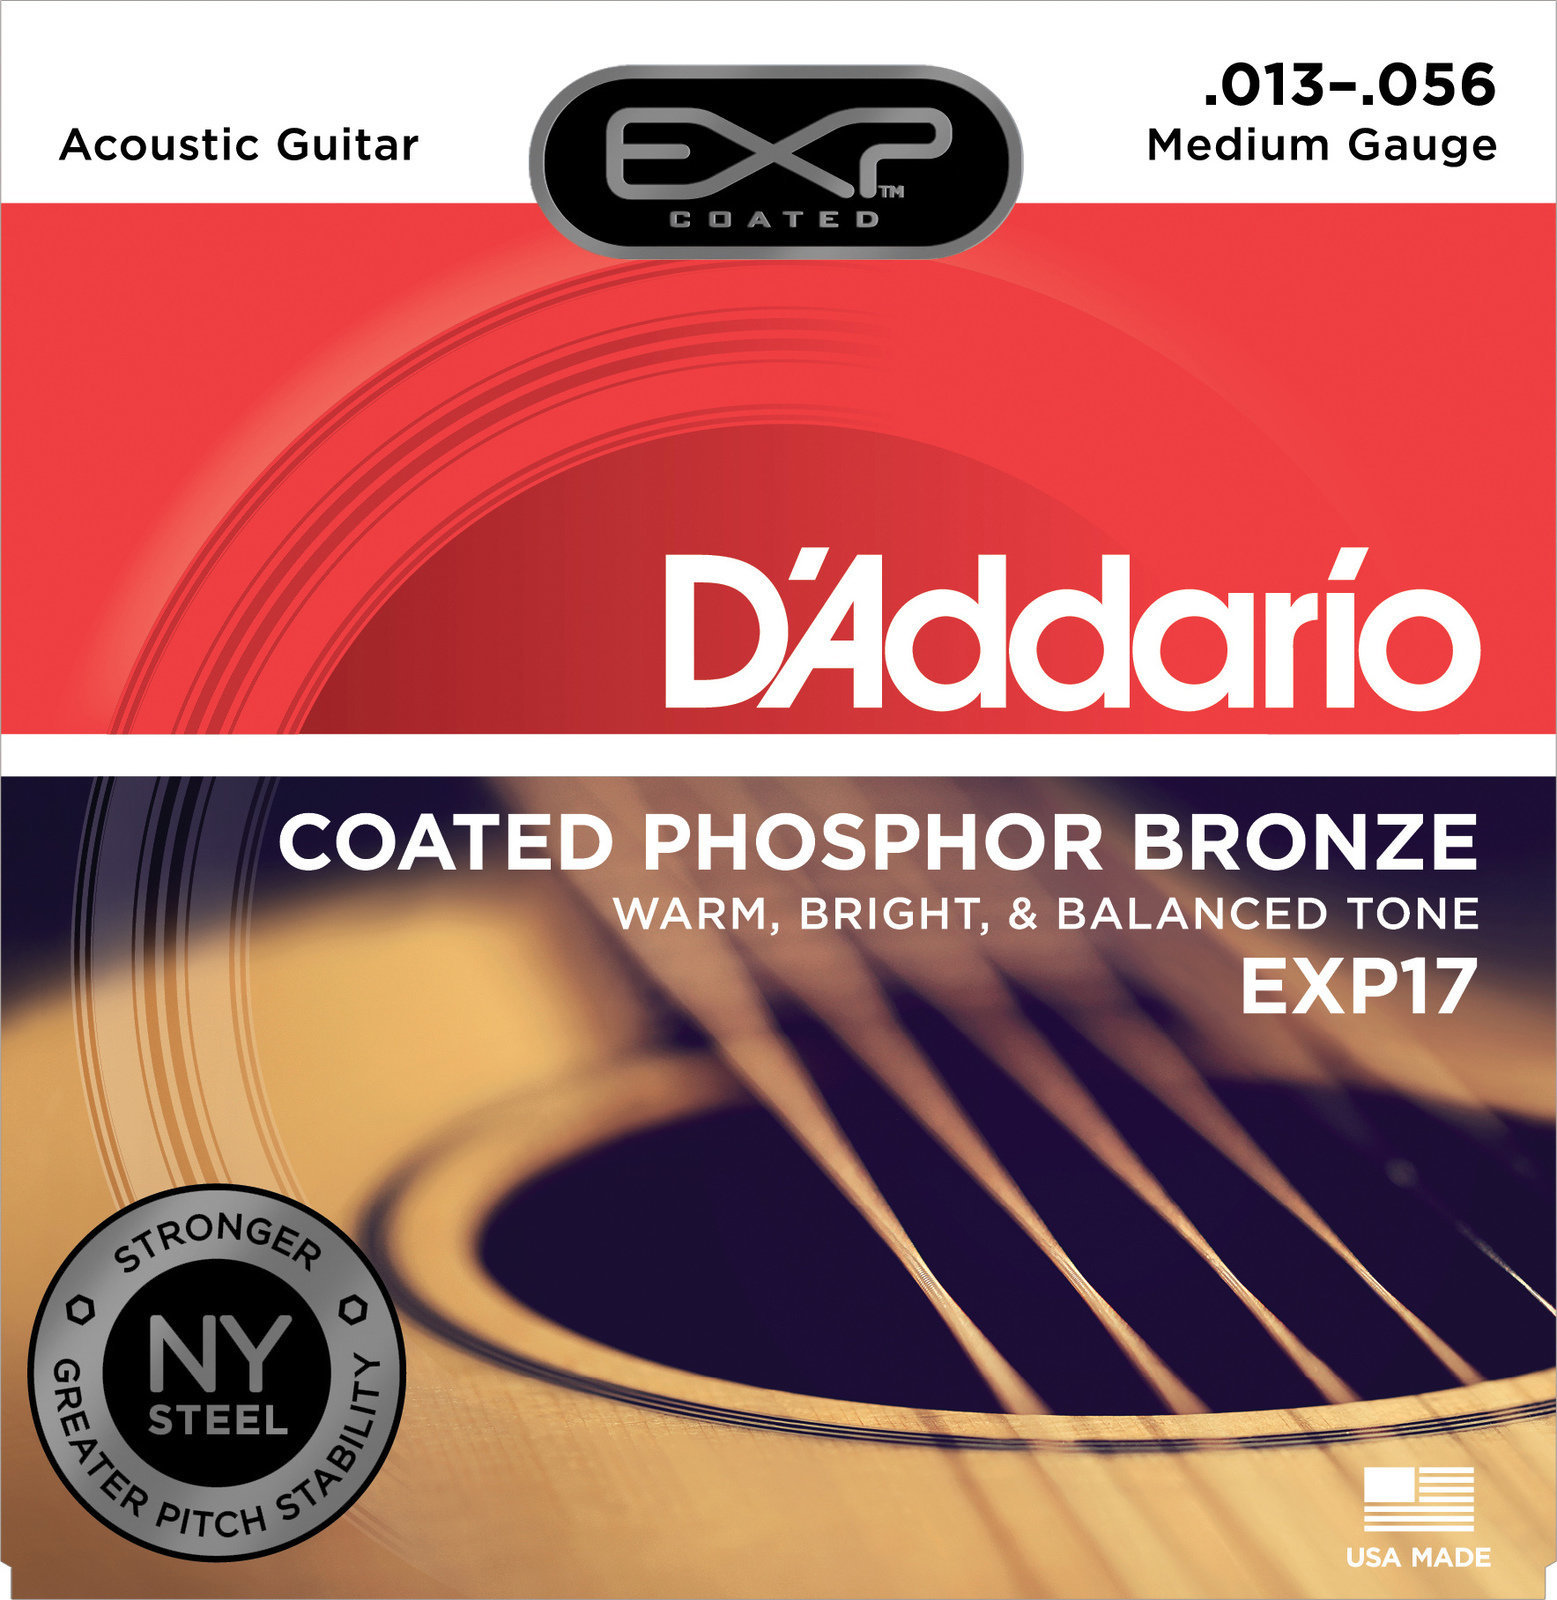 Struny pro akustickou kytaru D'Addario EXP17